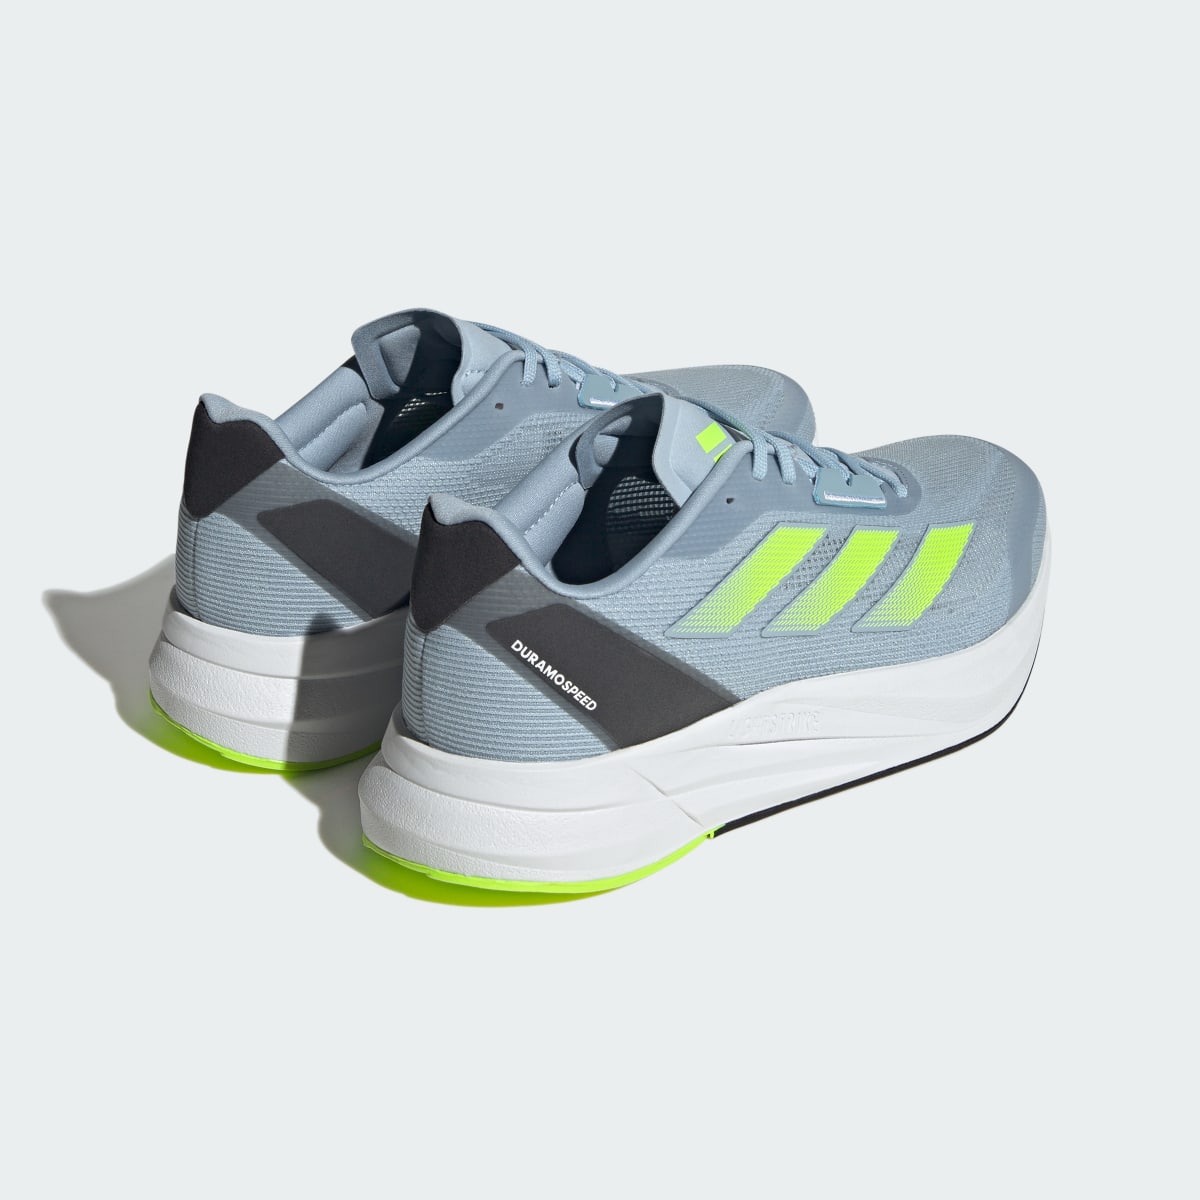 Adidas Duramo Speed Running Shoes. 6